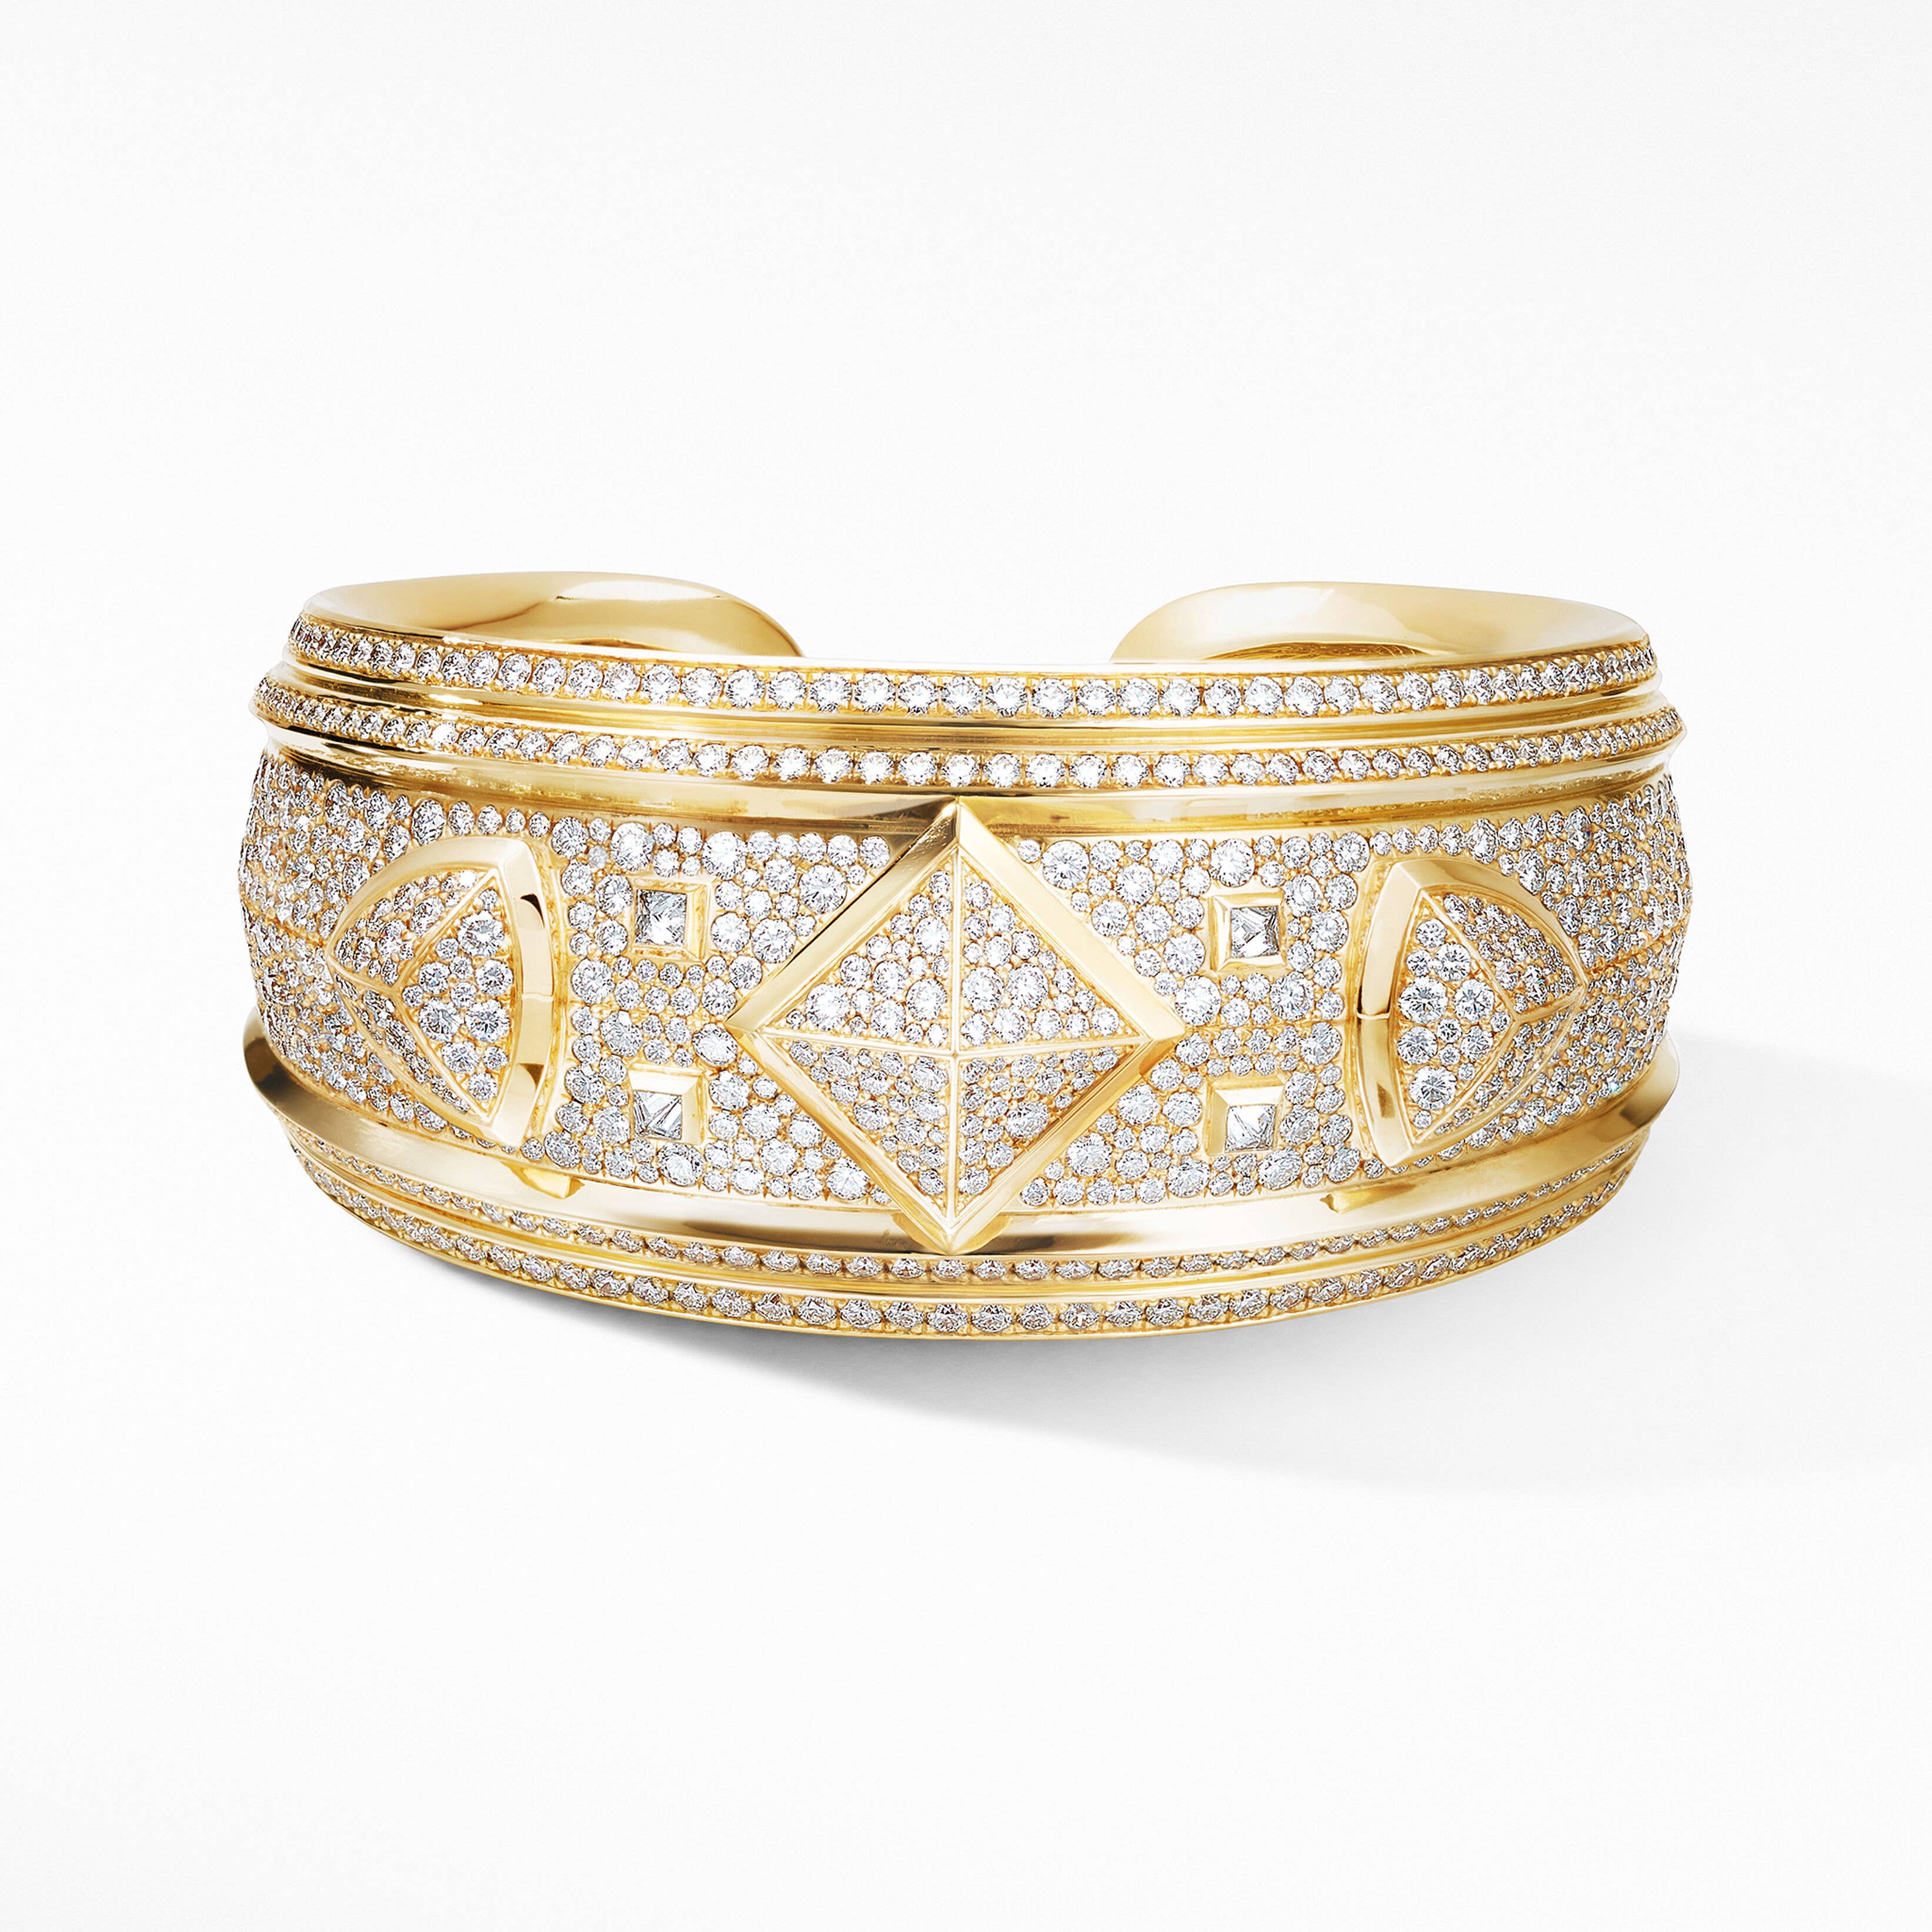 Modern Renaissance Cuff Bracelet in 18K Yellow Gold with Full Pavé Diamonds